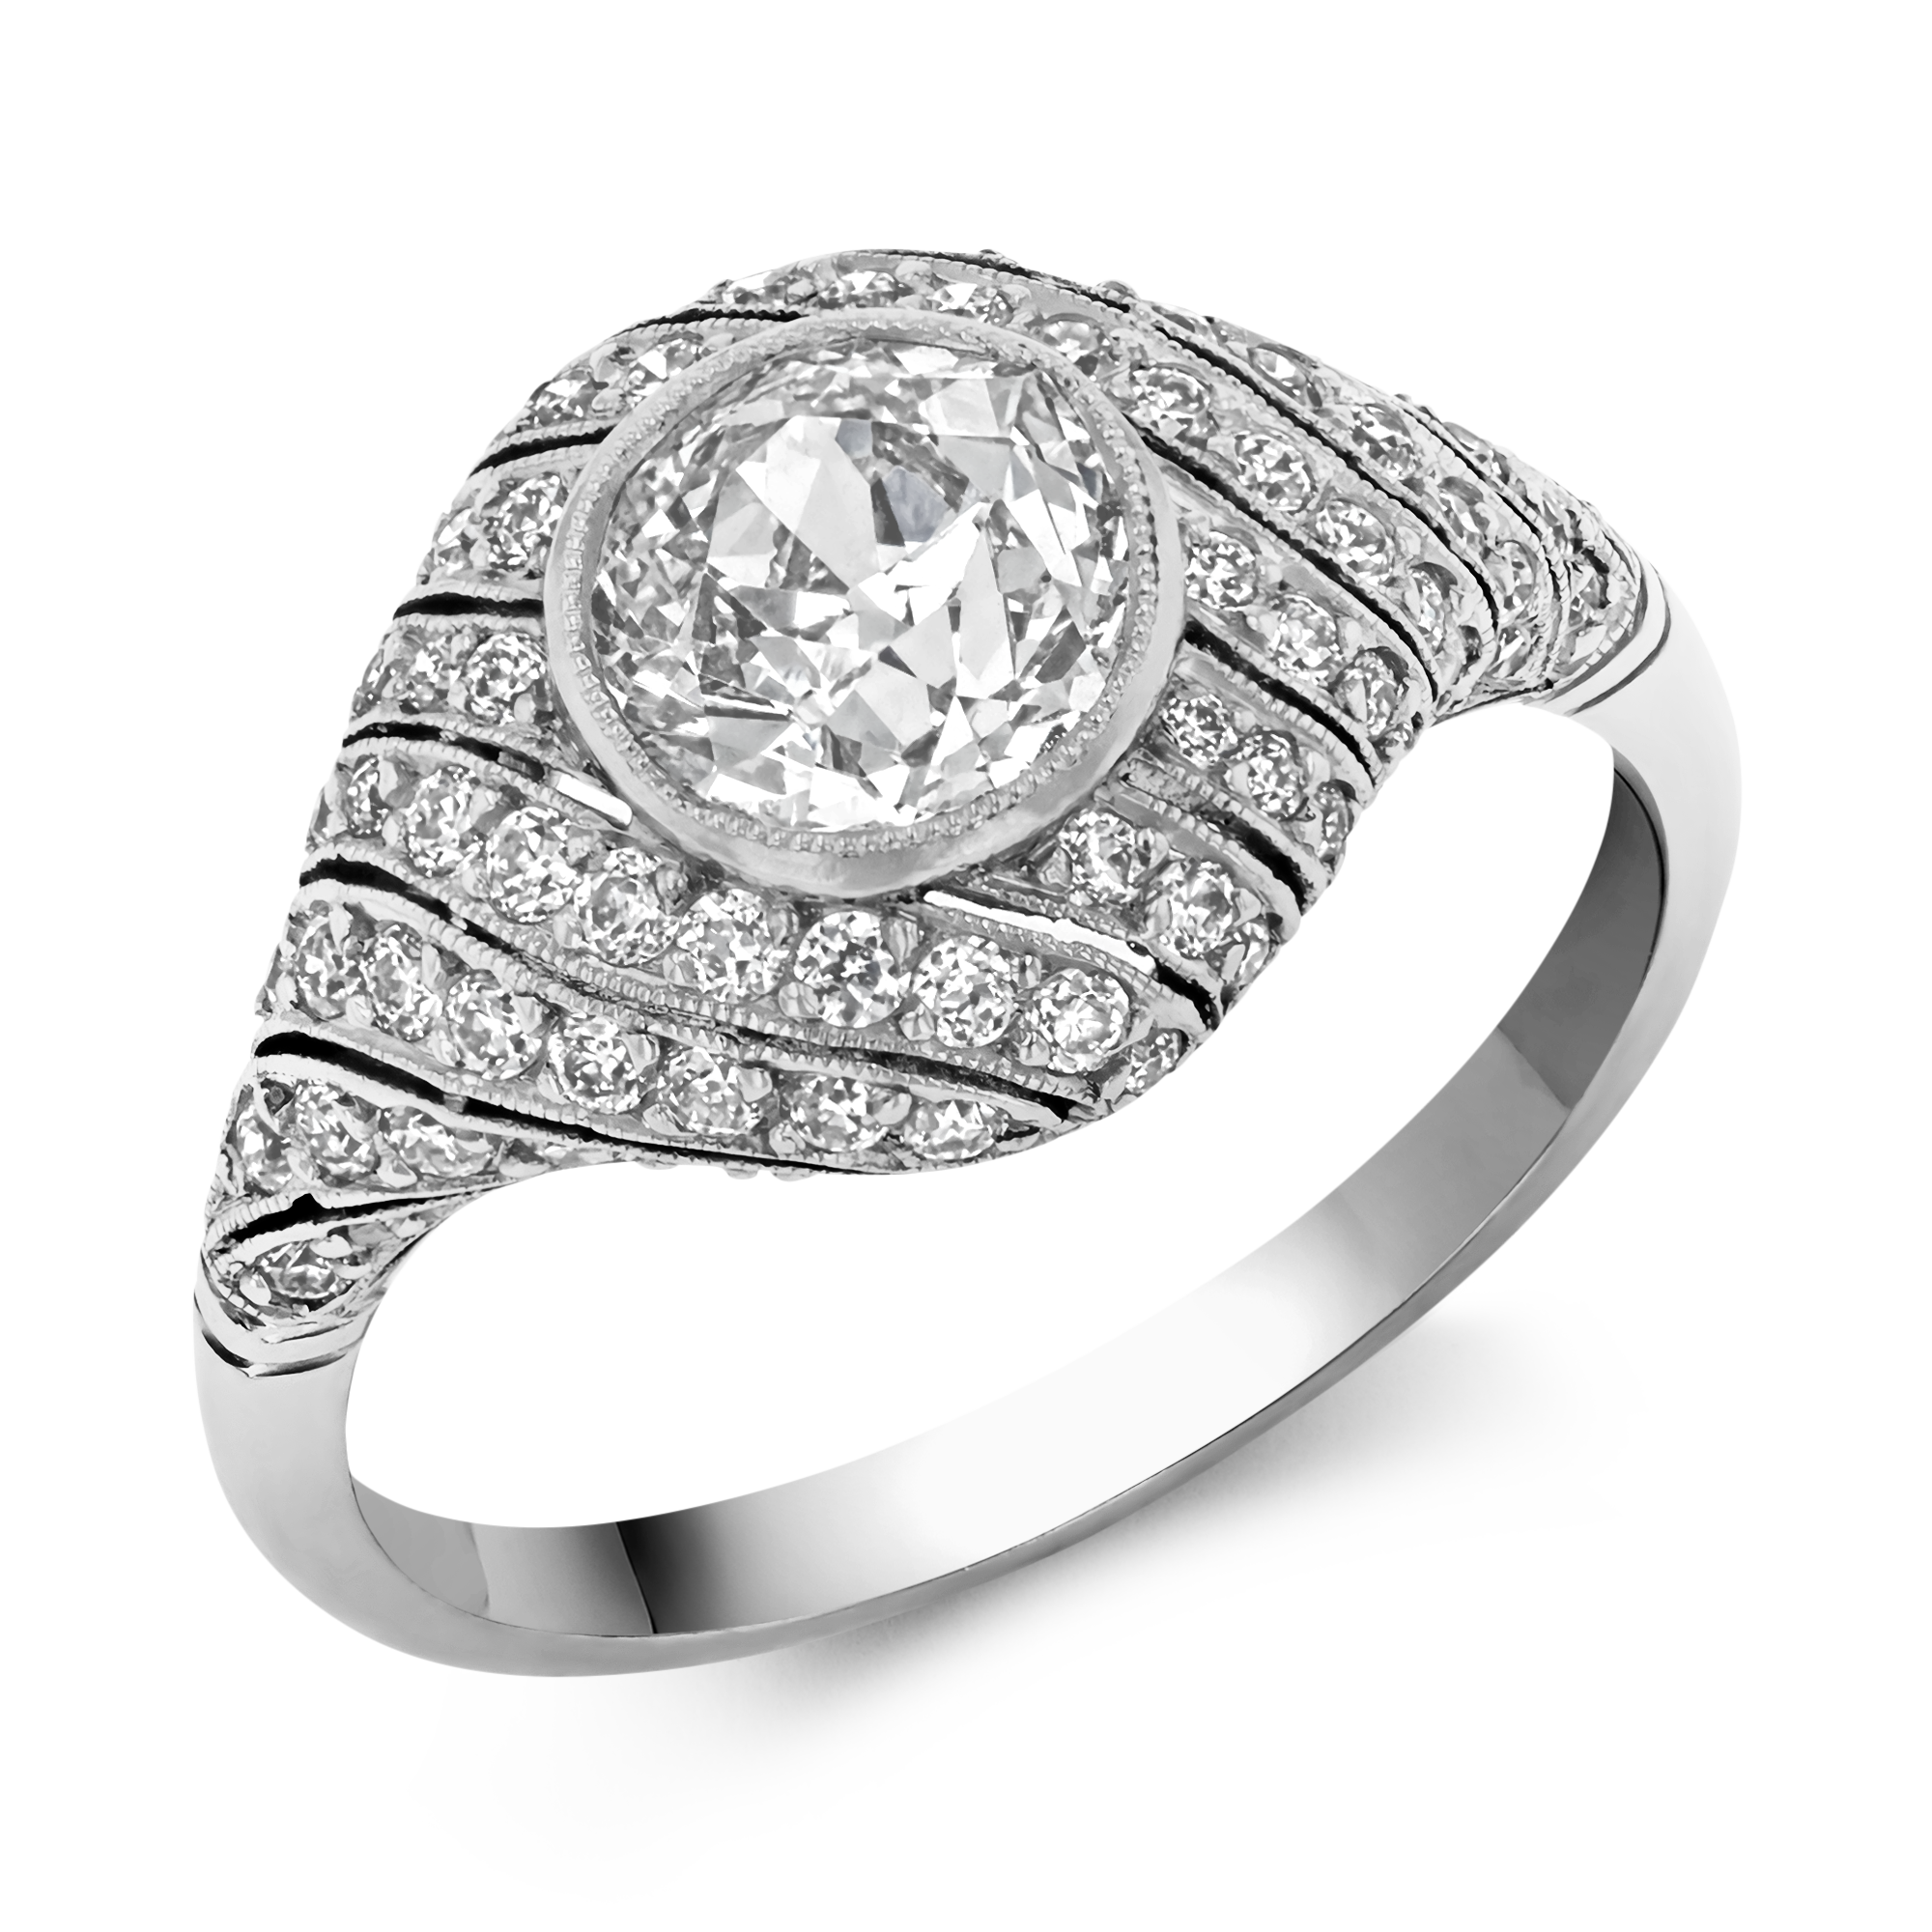 Art Deco Inspired Old European Cut Diamond Ring Old & Brilliant Cut, Millegrain Set_1